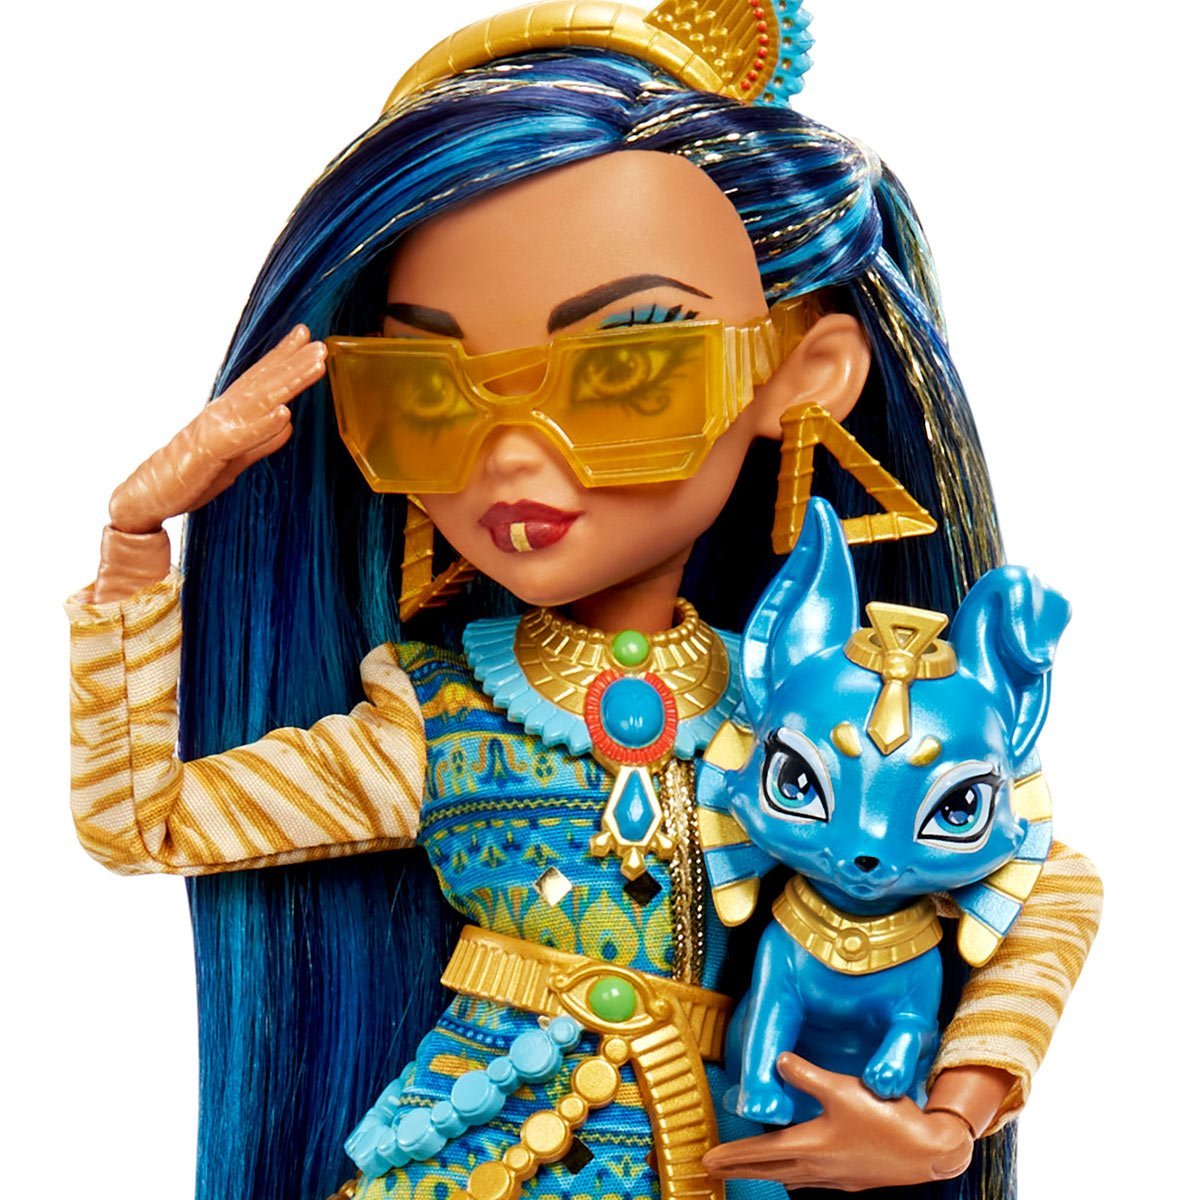 Monster High Faboolous Pets Cleo de Nile Doll with Tut Mattel Toys - ToyWiz